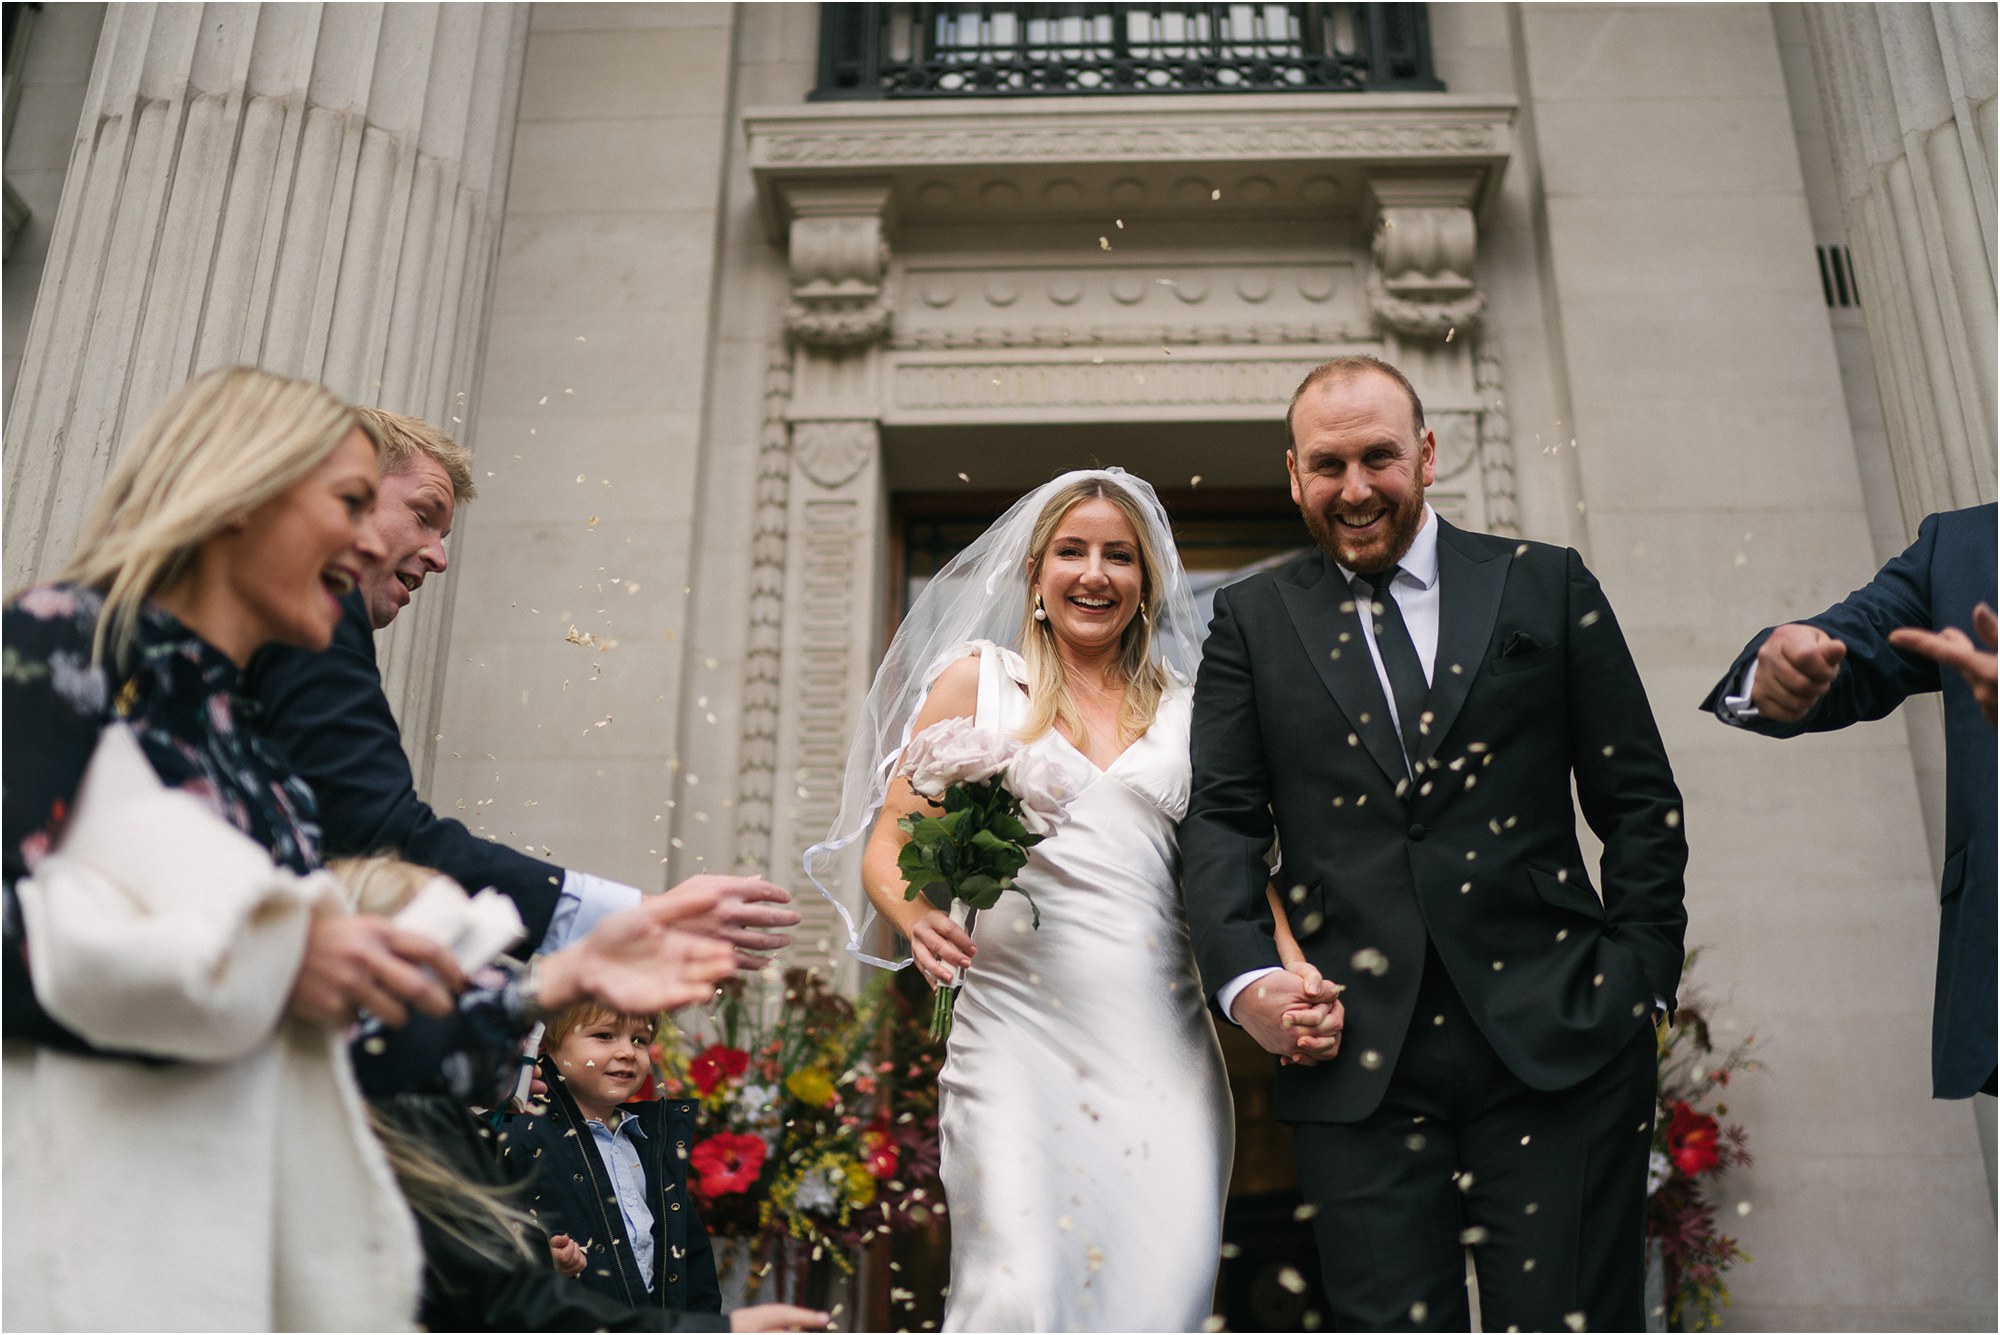 A wedding at Old Marylebone Town Hall